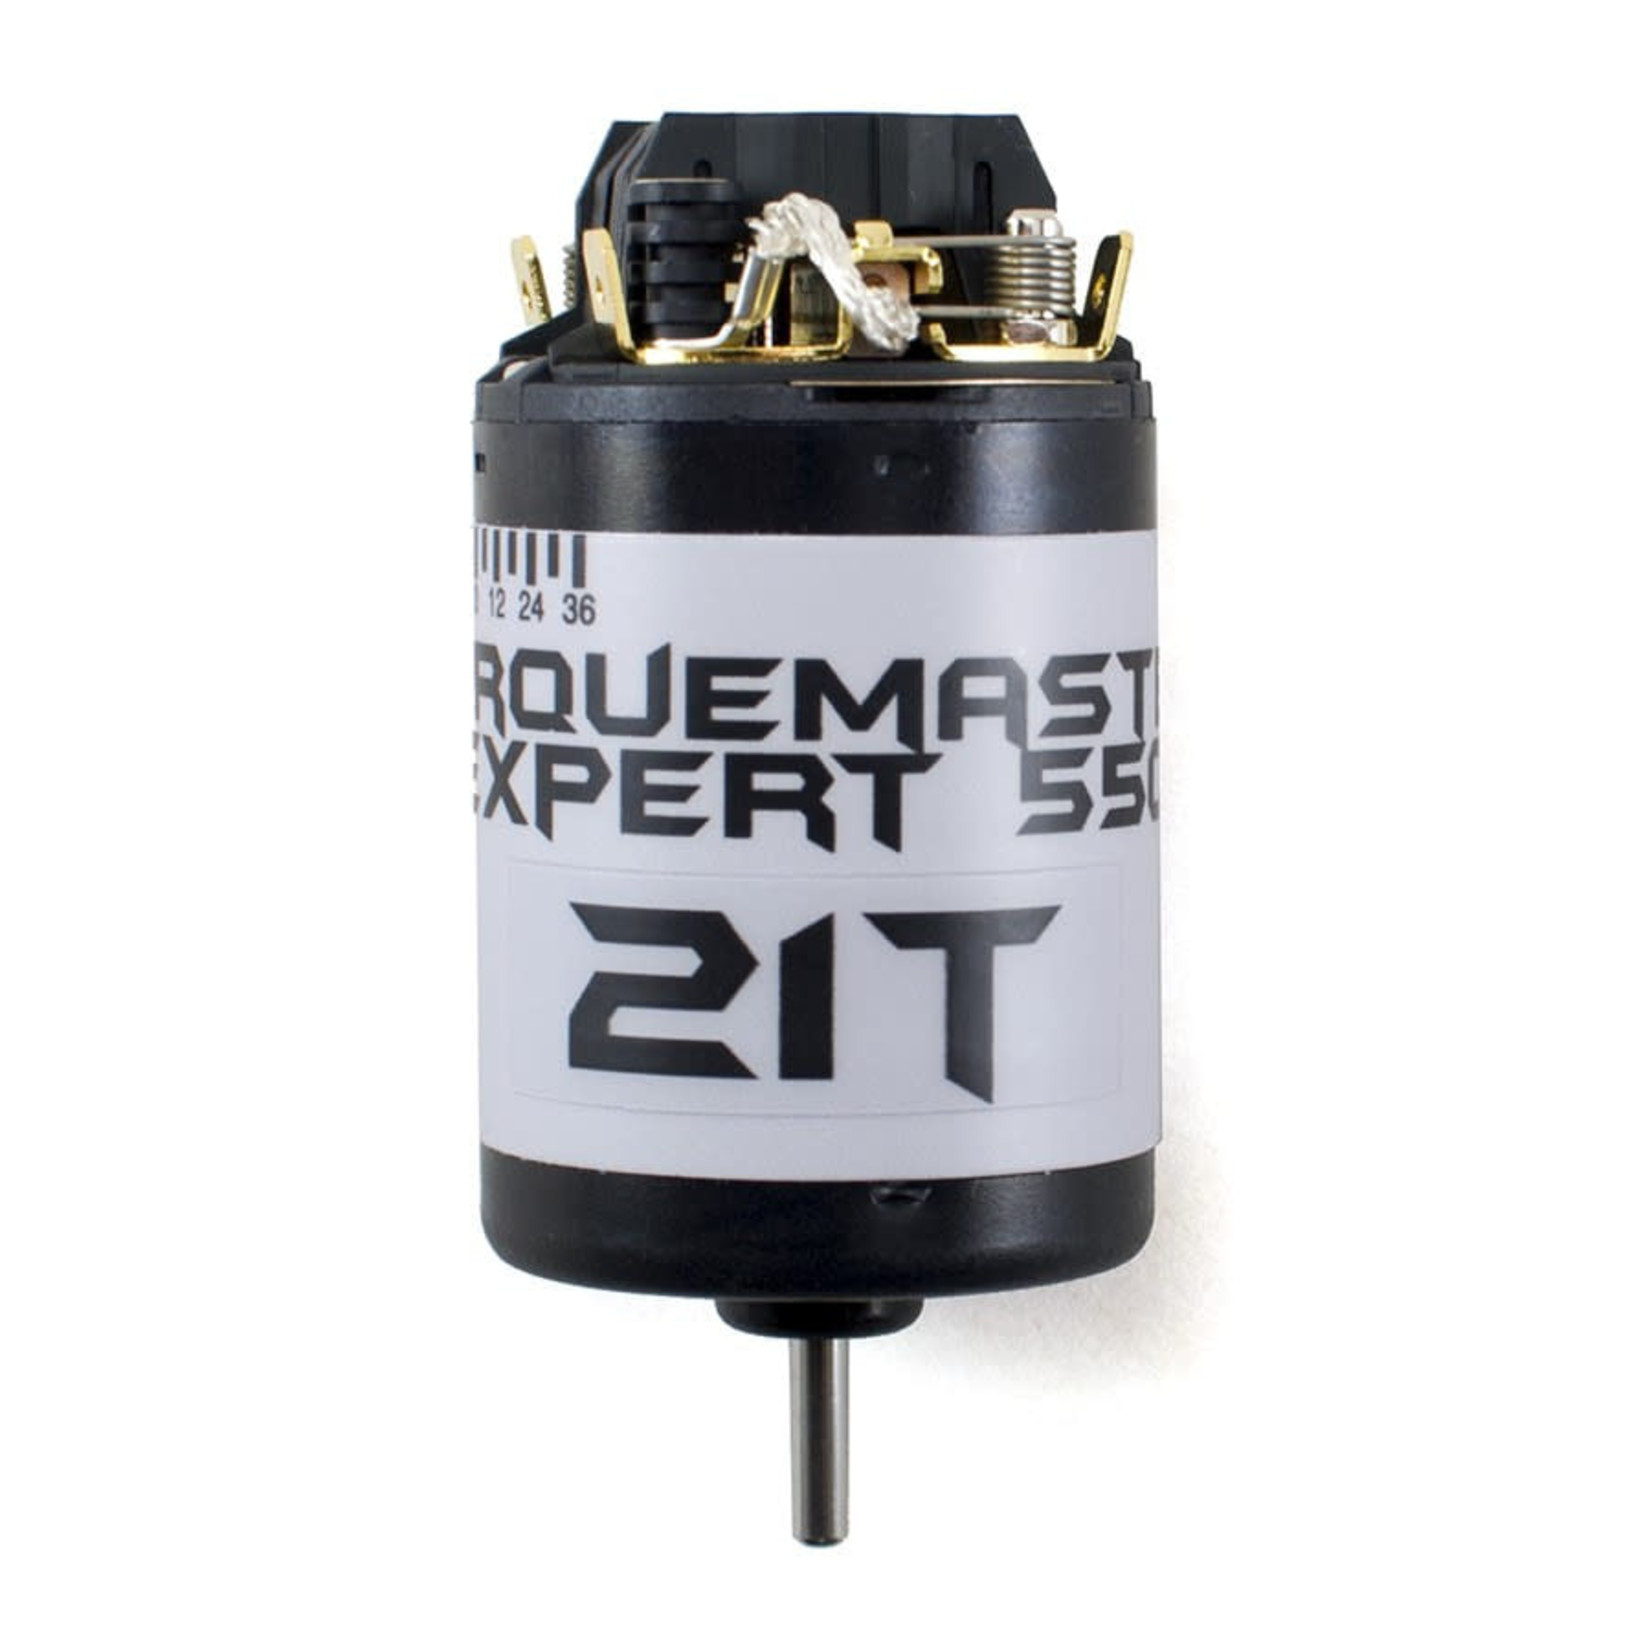 Holmes Hobbies Holmes Hobbies TorqueMaster Expert 550 Brushed Electric Motor (21T) #110100051